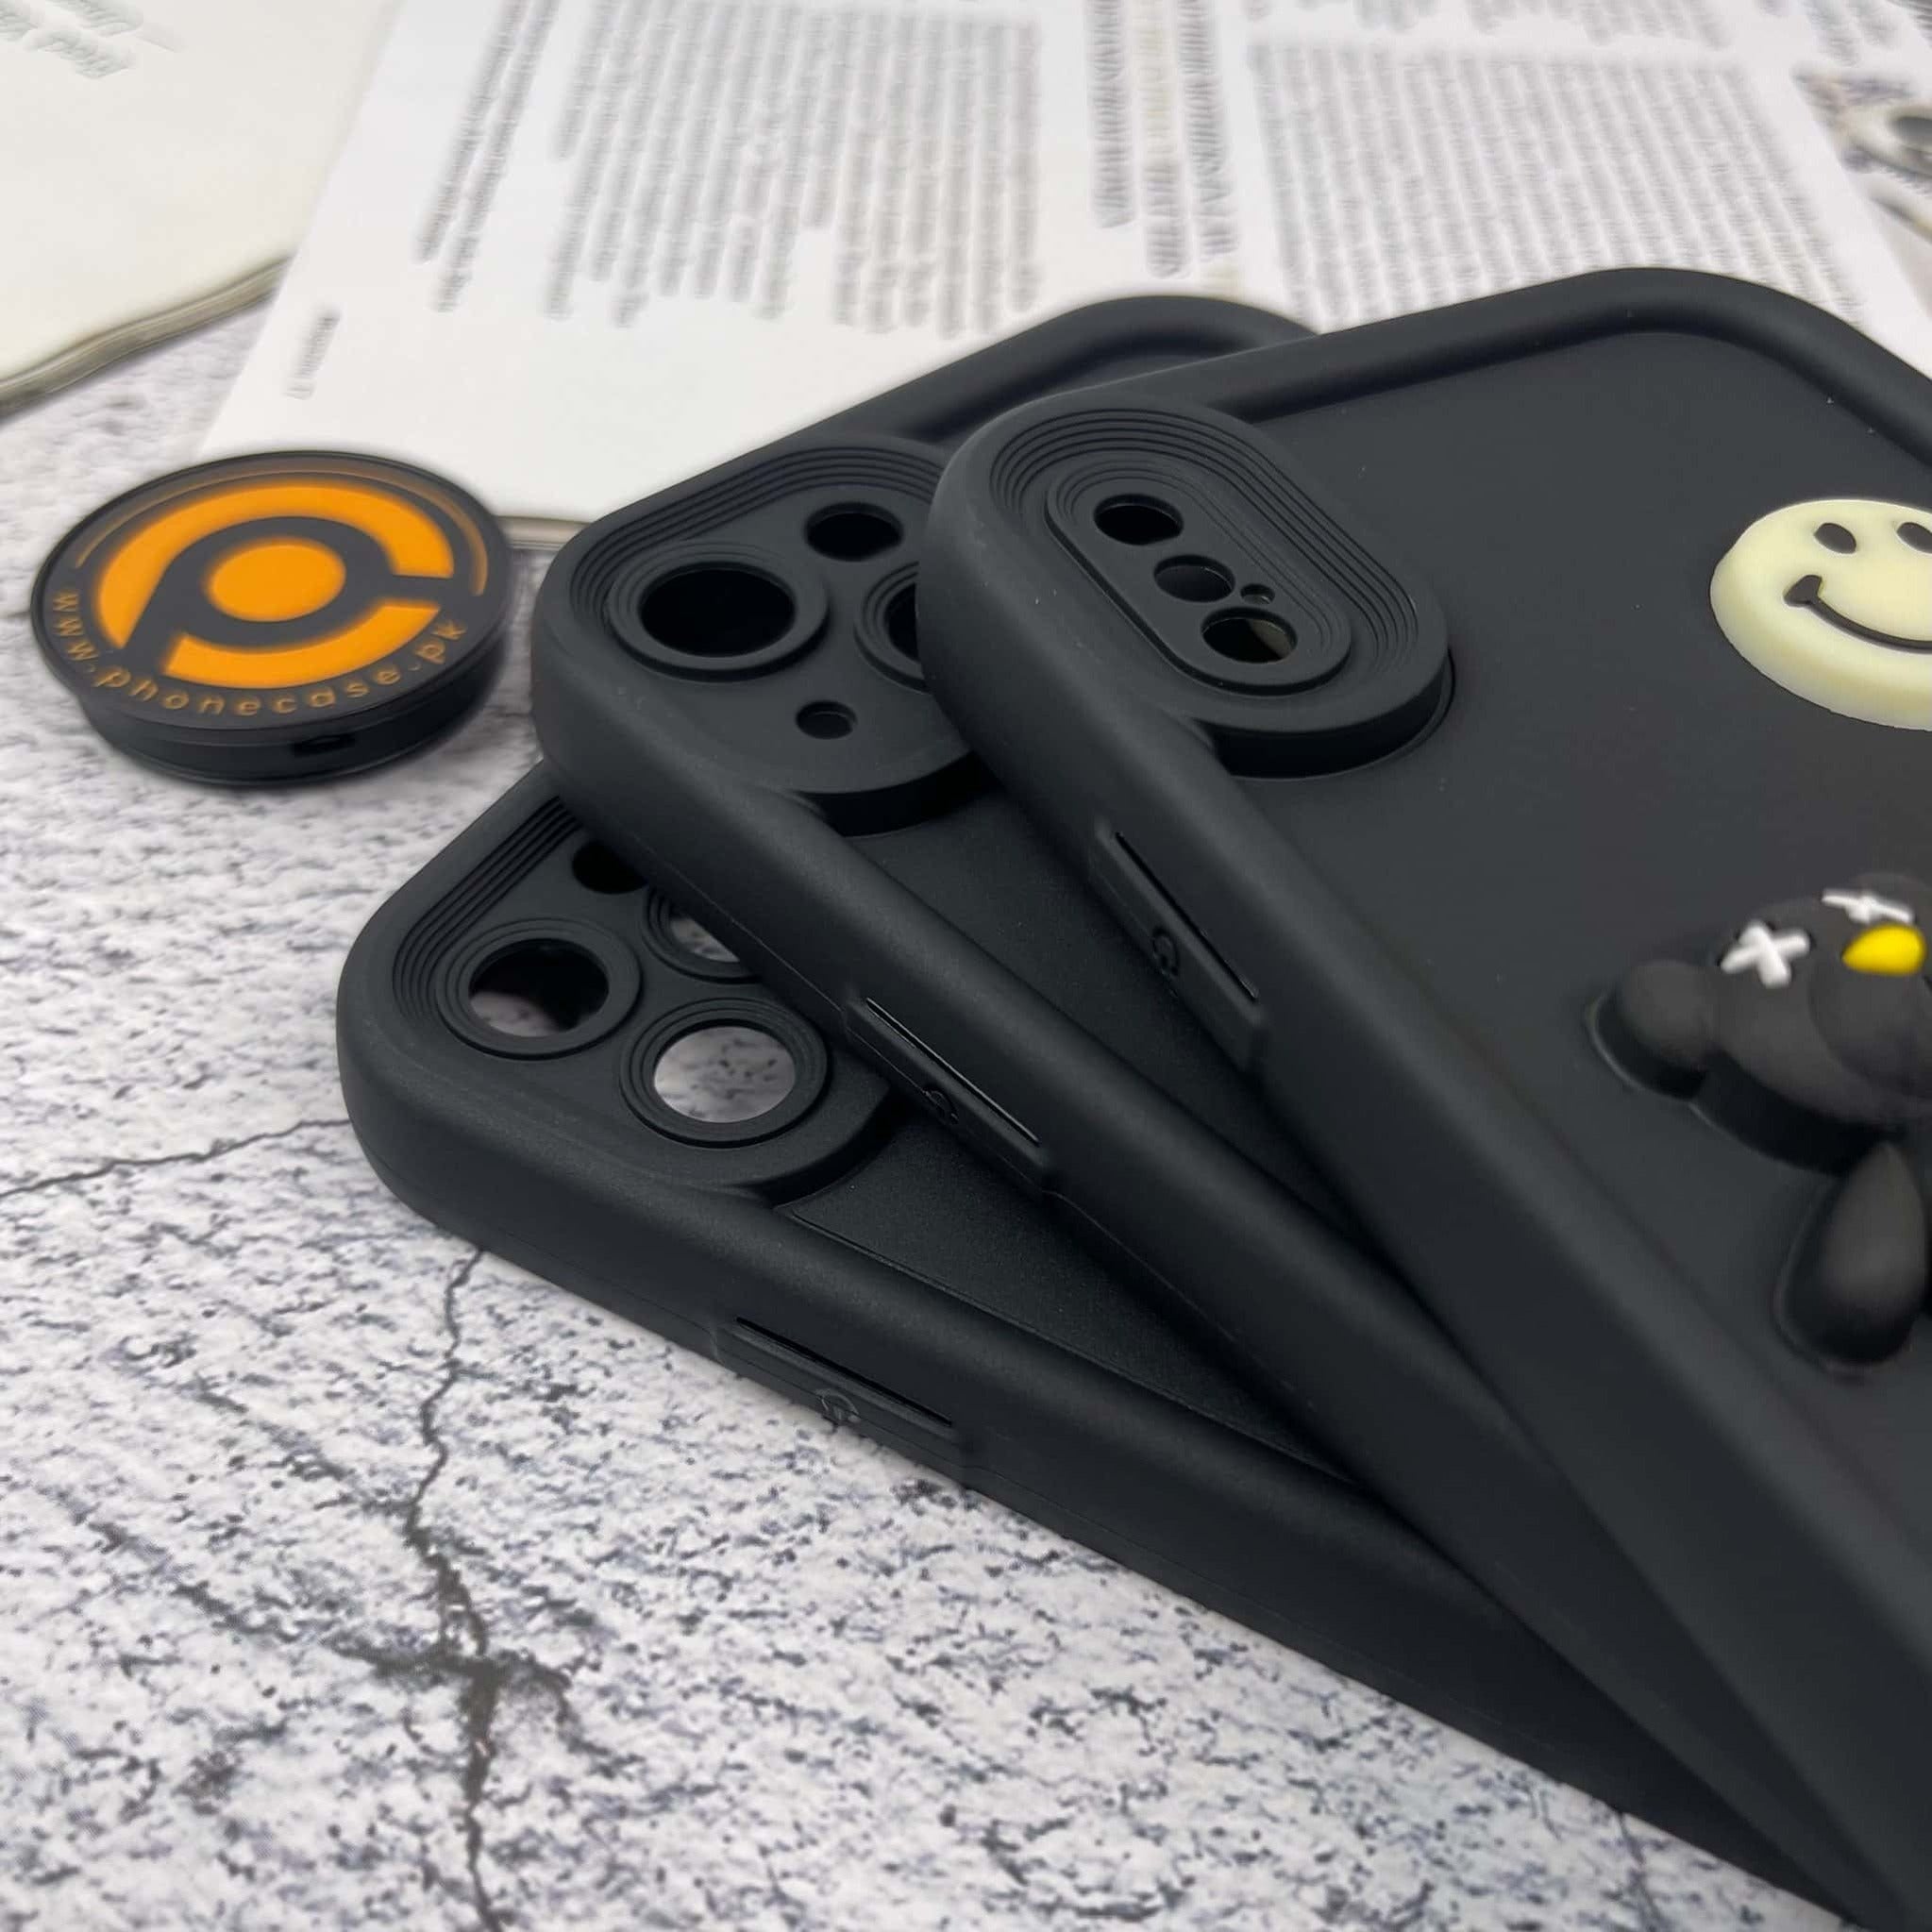 iPhone 7 Plus/ 8 Plus Cute 3D Black Bear Icons Liquid Silicon Case